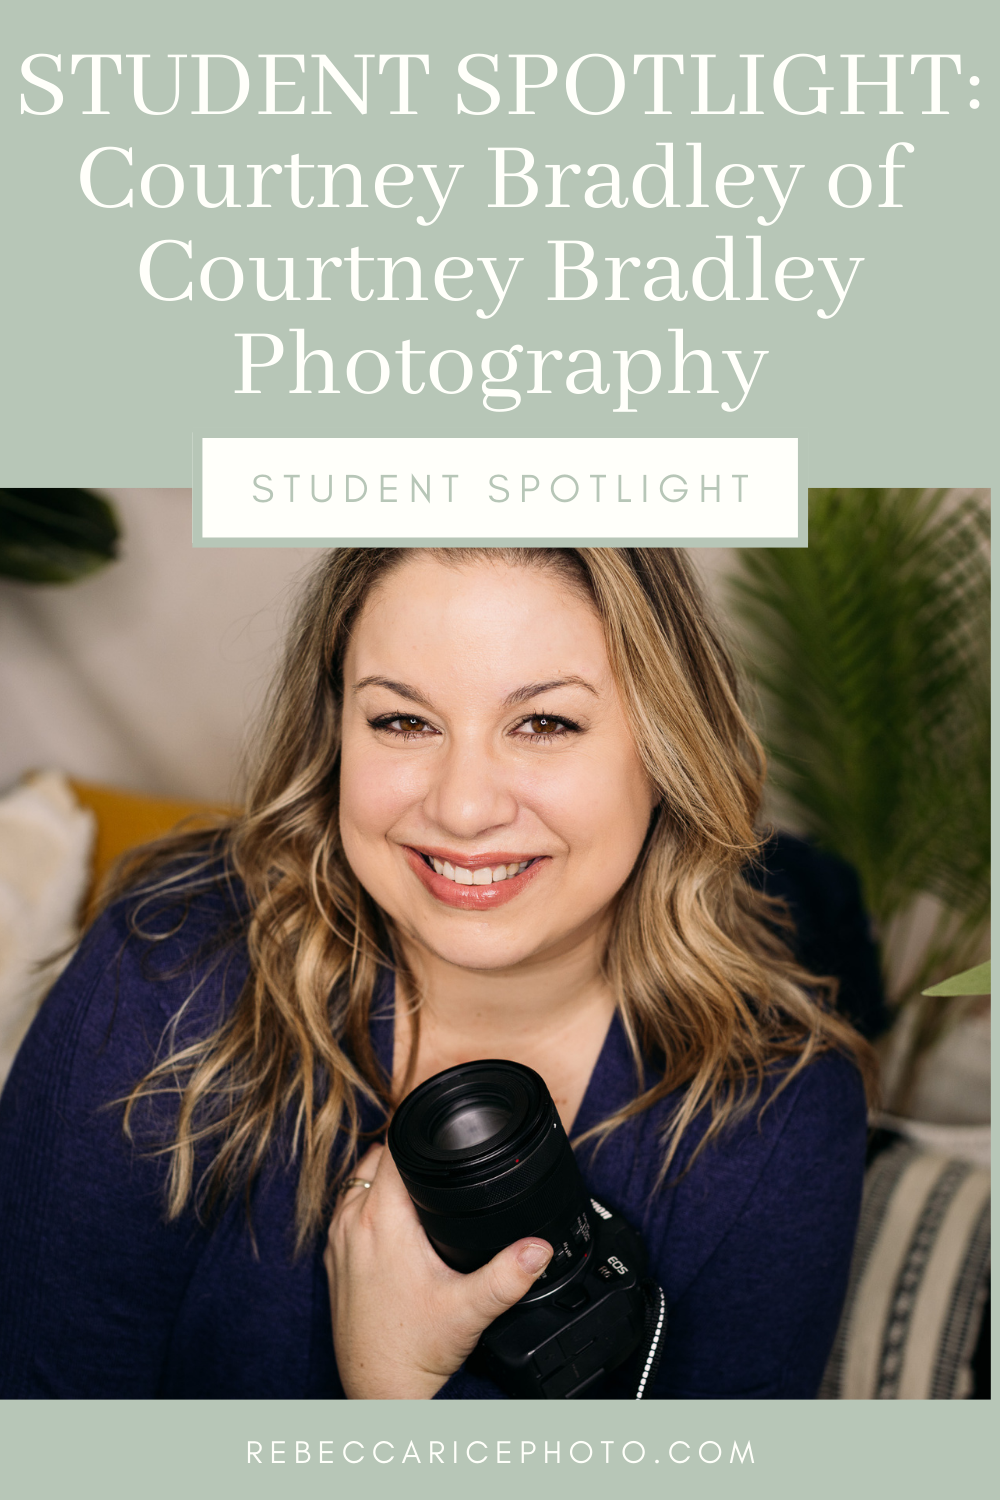 Student Spotlight: Courtney Bradley of Courtney Bradley Photography